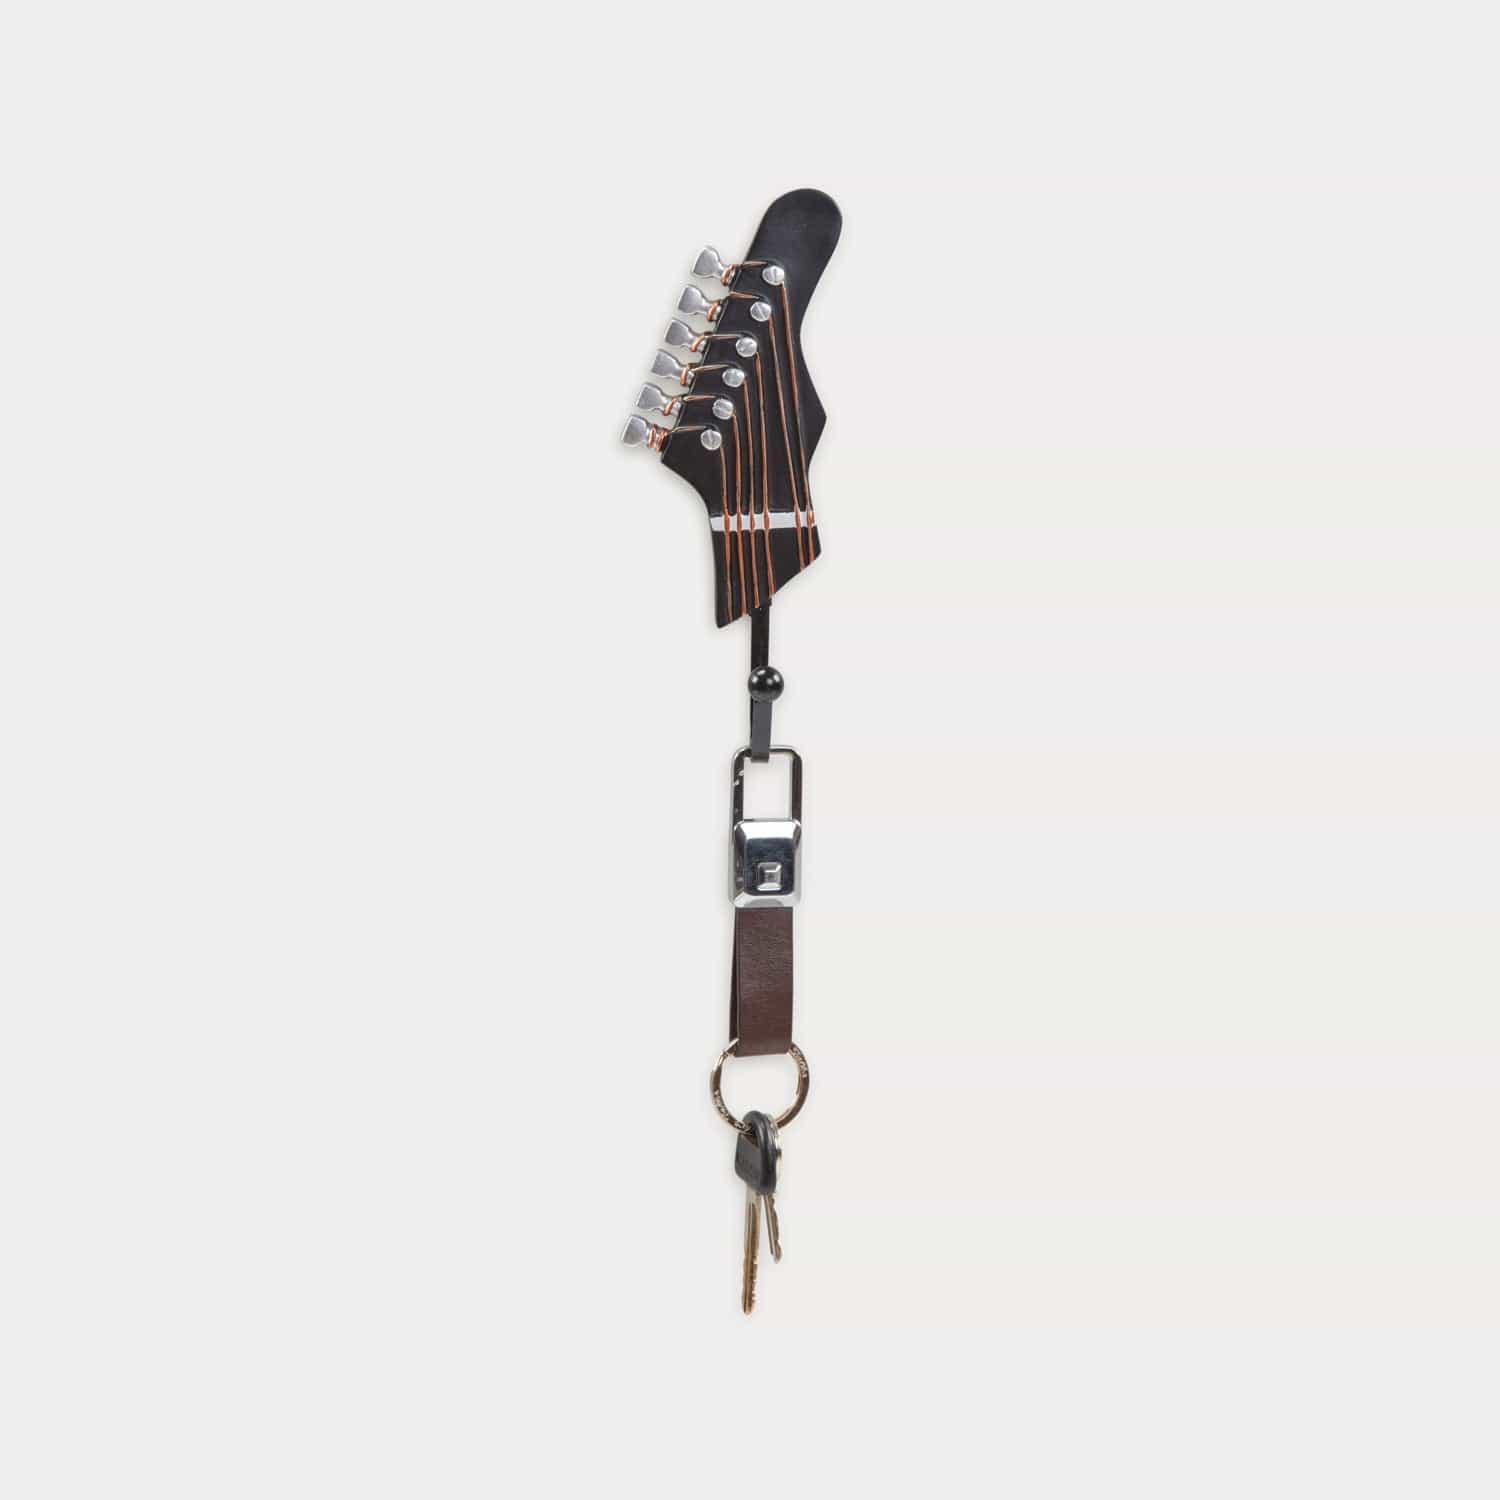 Red Butler Key Holder Key Holder - Guiter DKKH00R08Y18A1 KKH08A1 Guitar Headstock Key Holders – Stylish Storage with Musical Vibes Redbutler